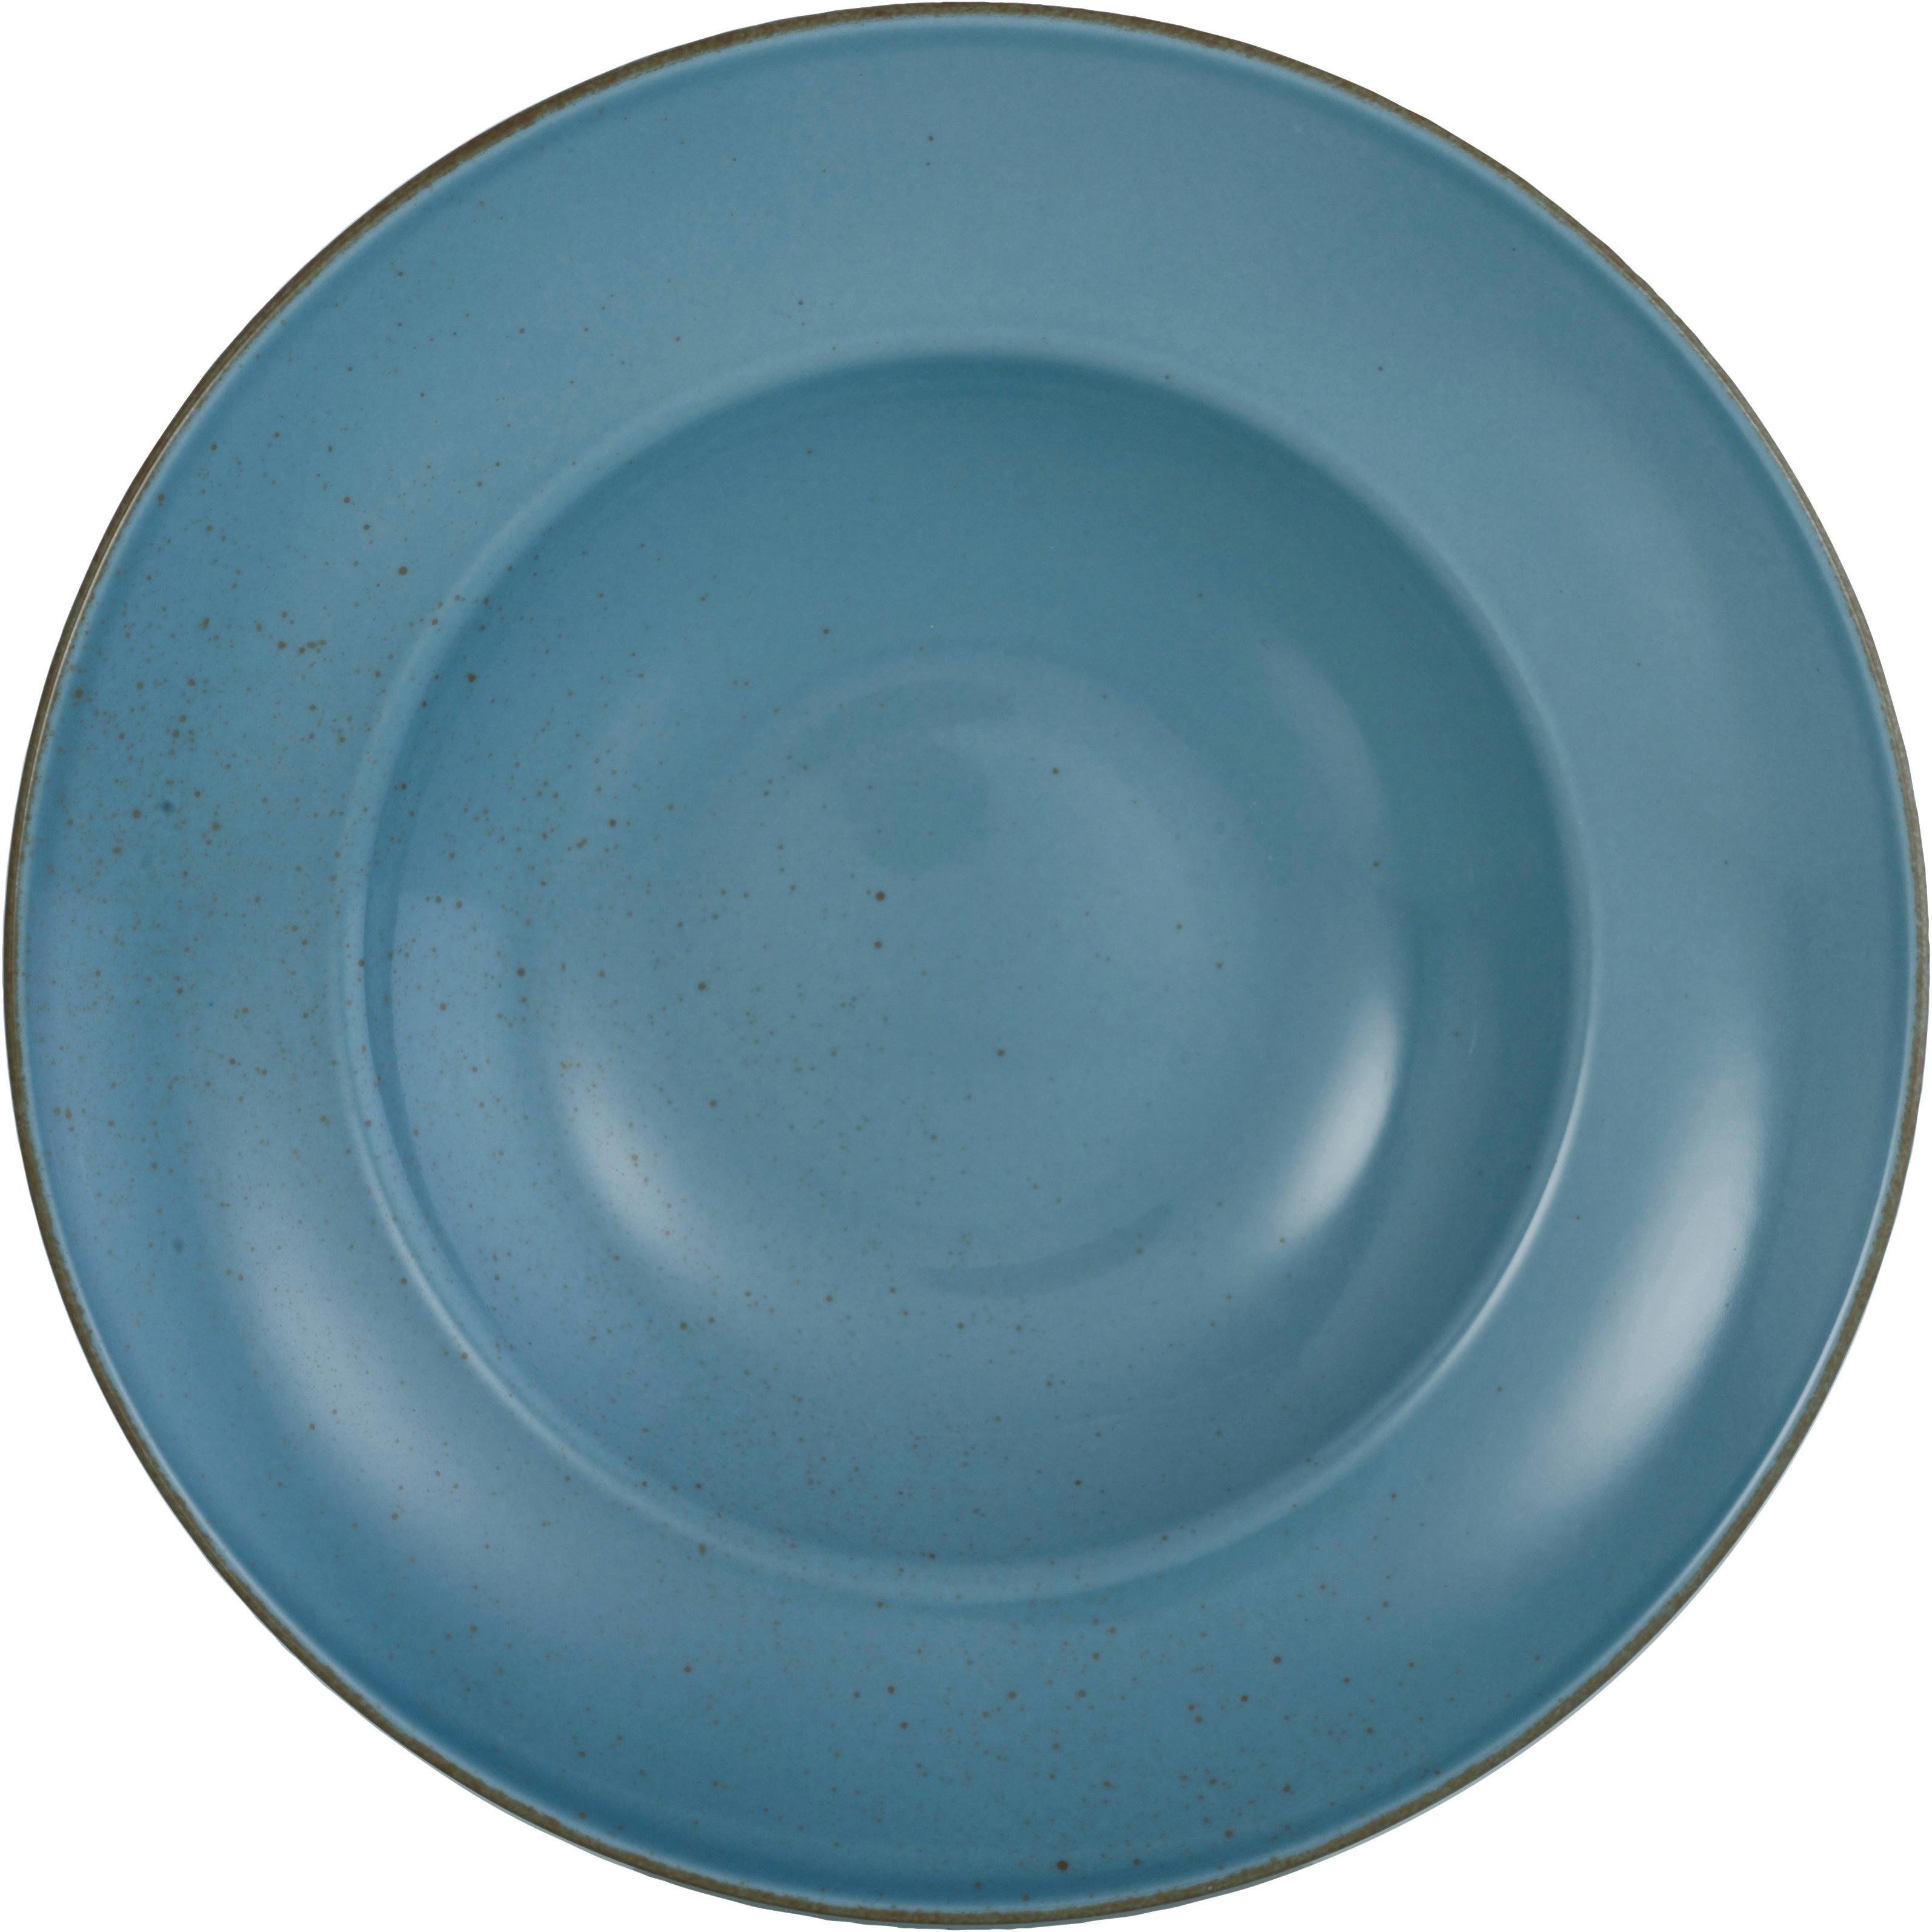 Krožnik Za Testenine Capri - modra, Moderno, keramika (27/27/4cm) - Premium Living